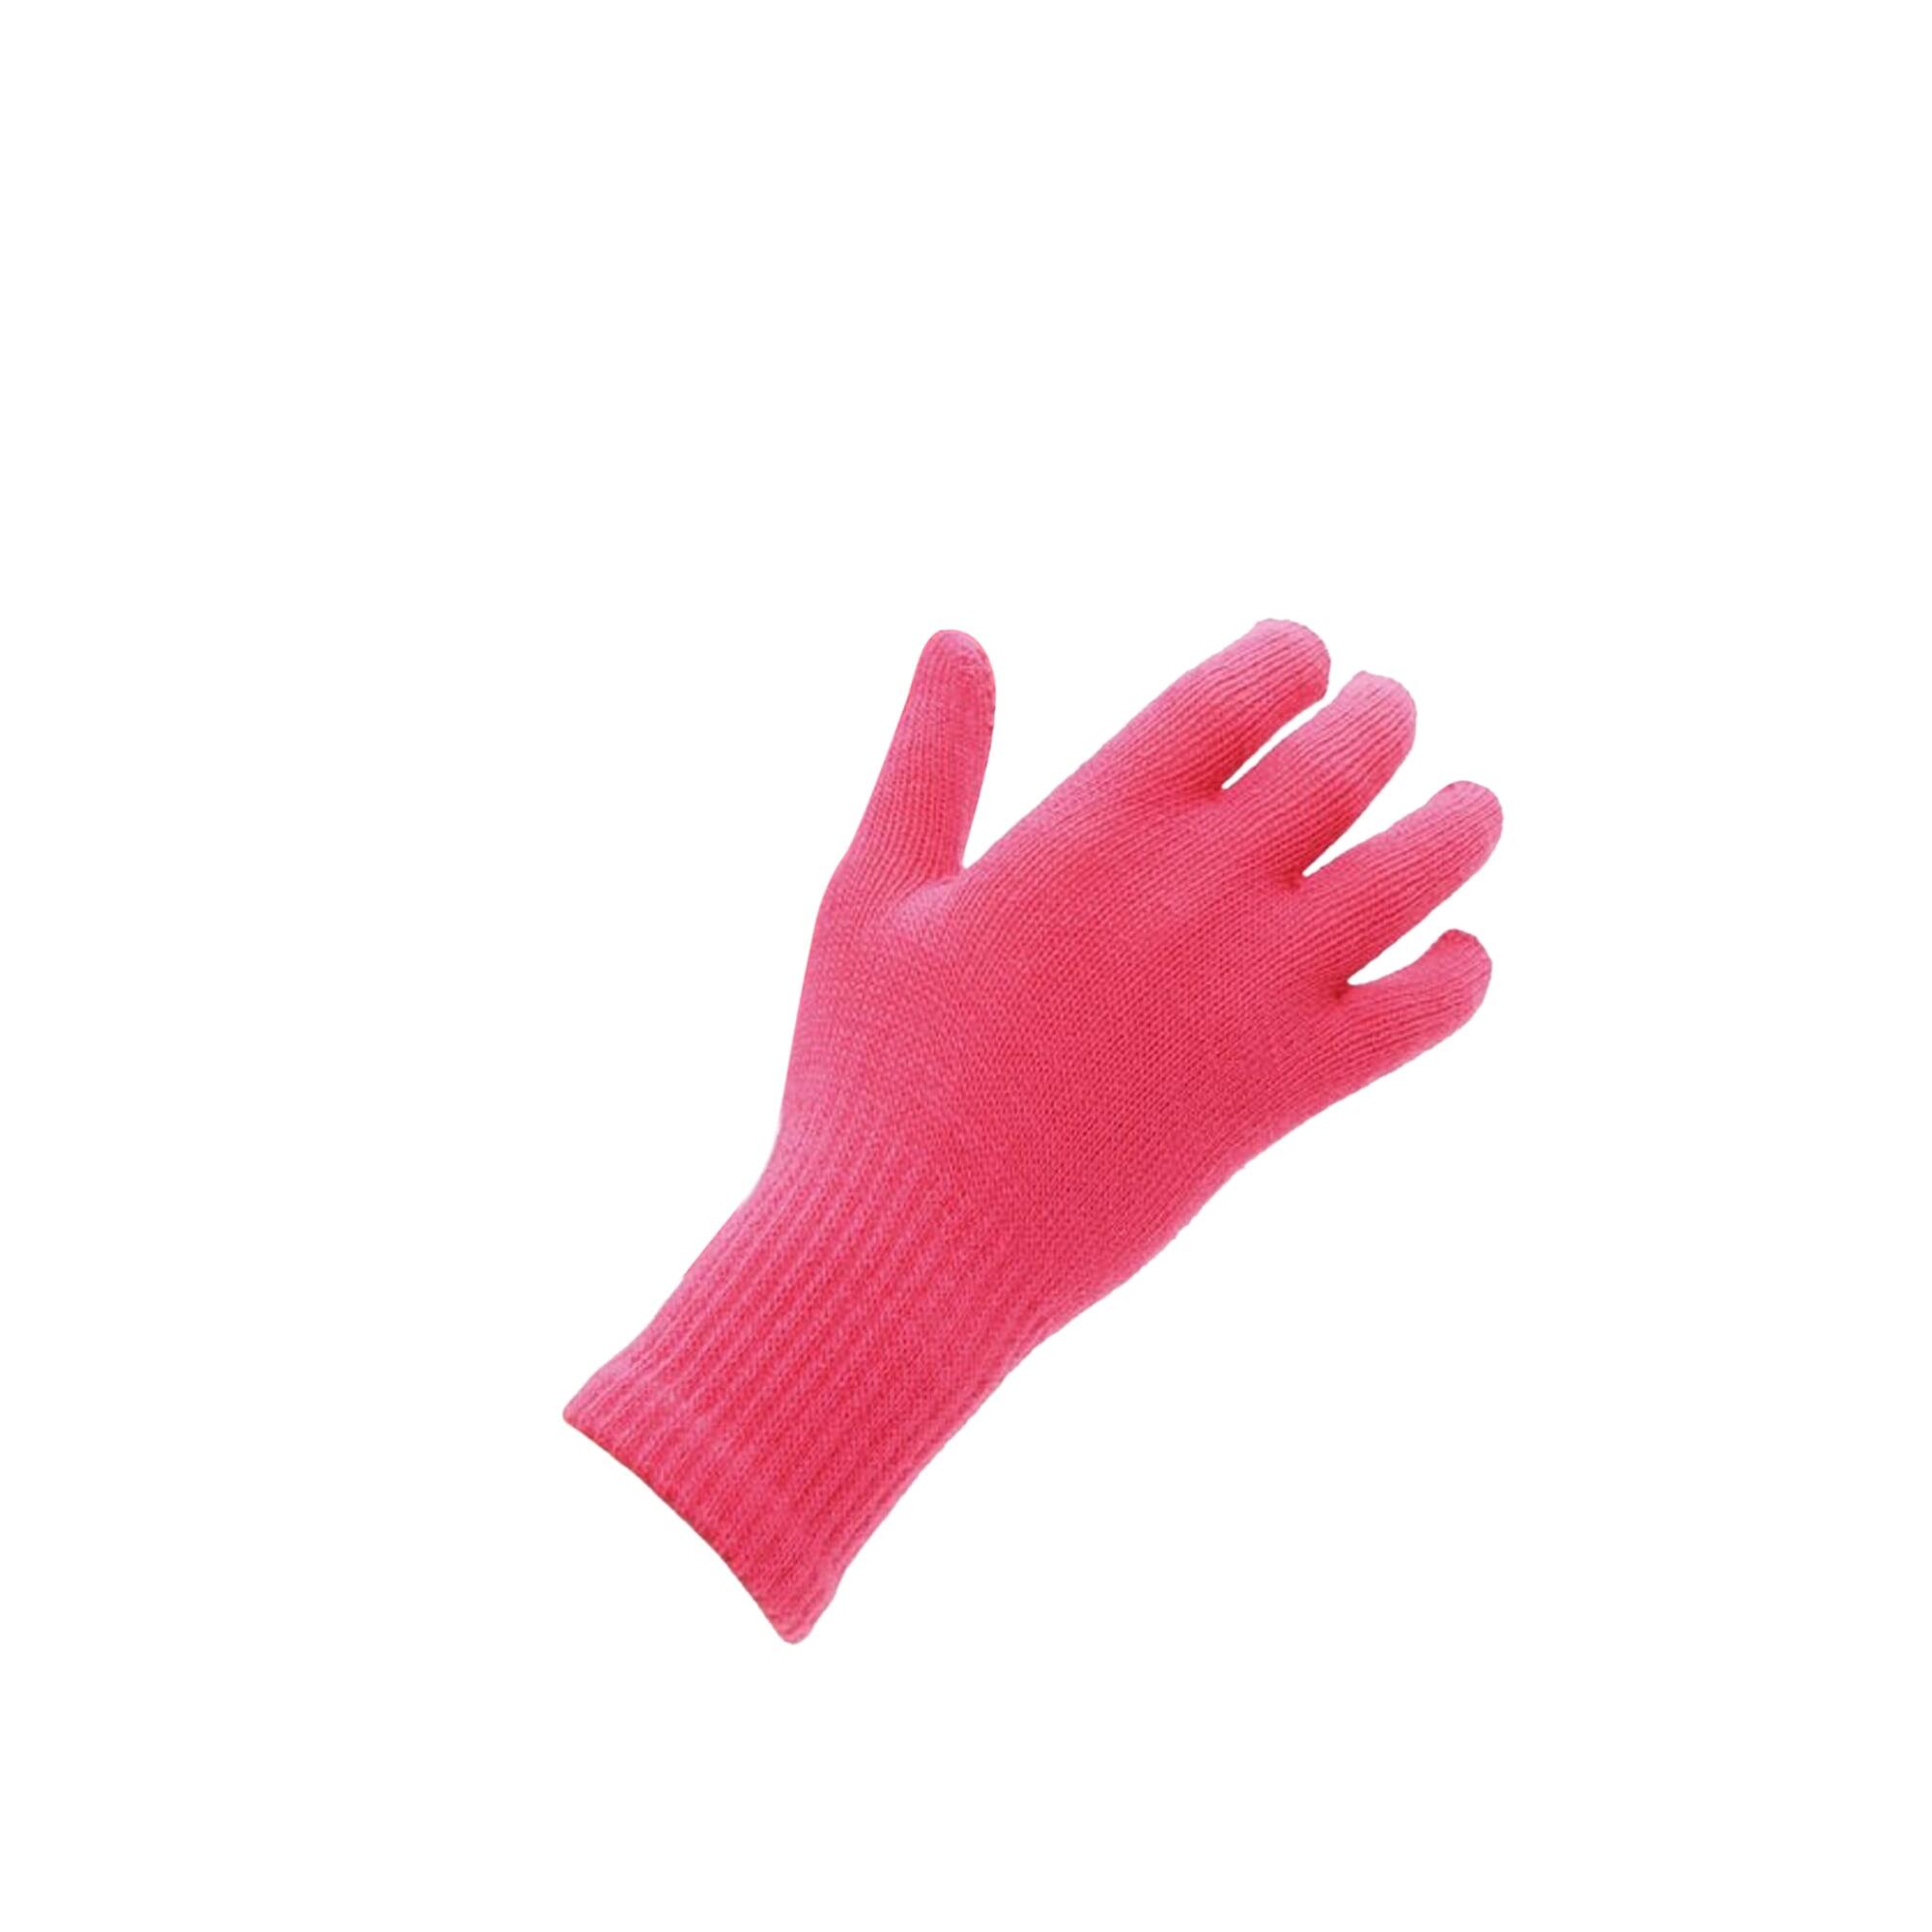 SHIRES Unisex Adult Suregrip Riding Gloves (Pink)